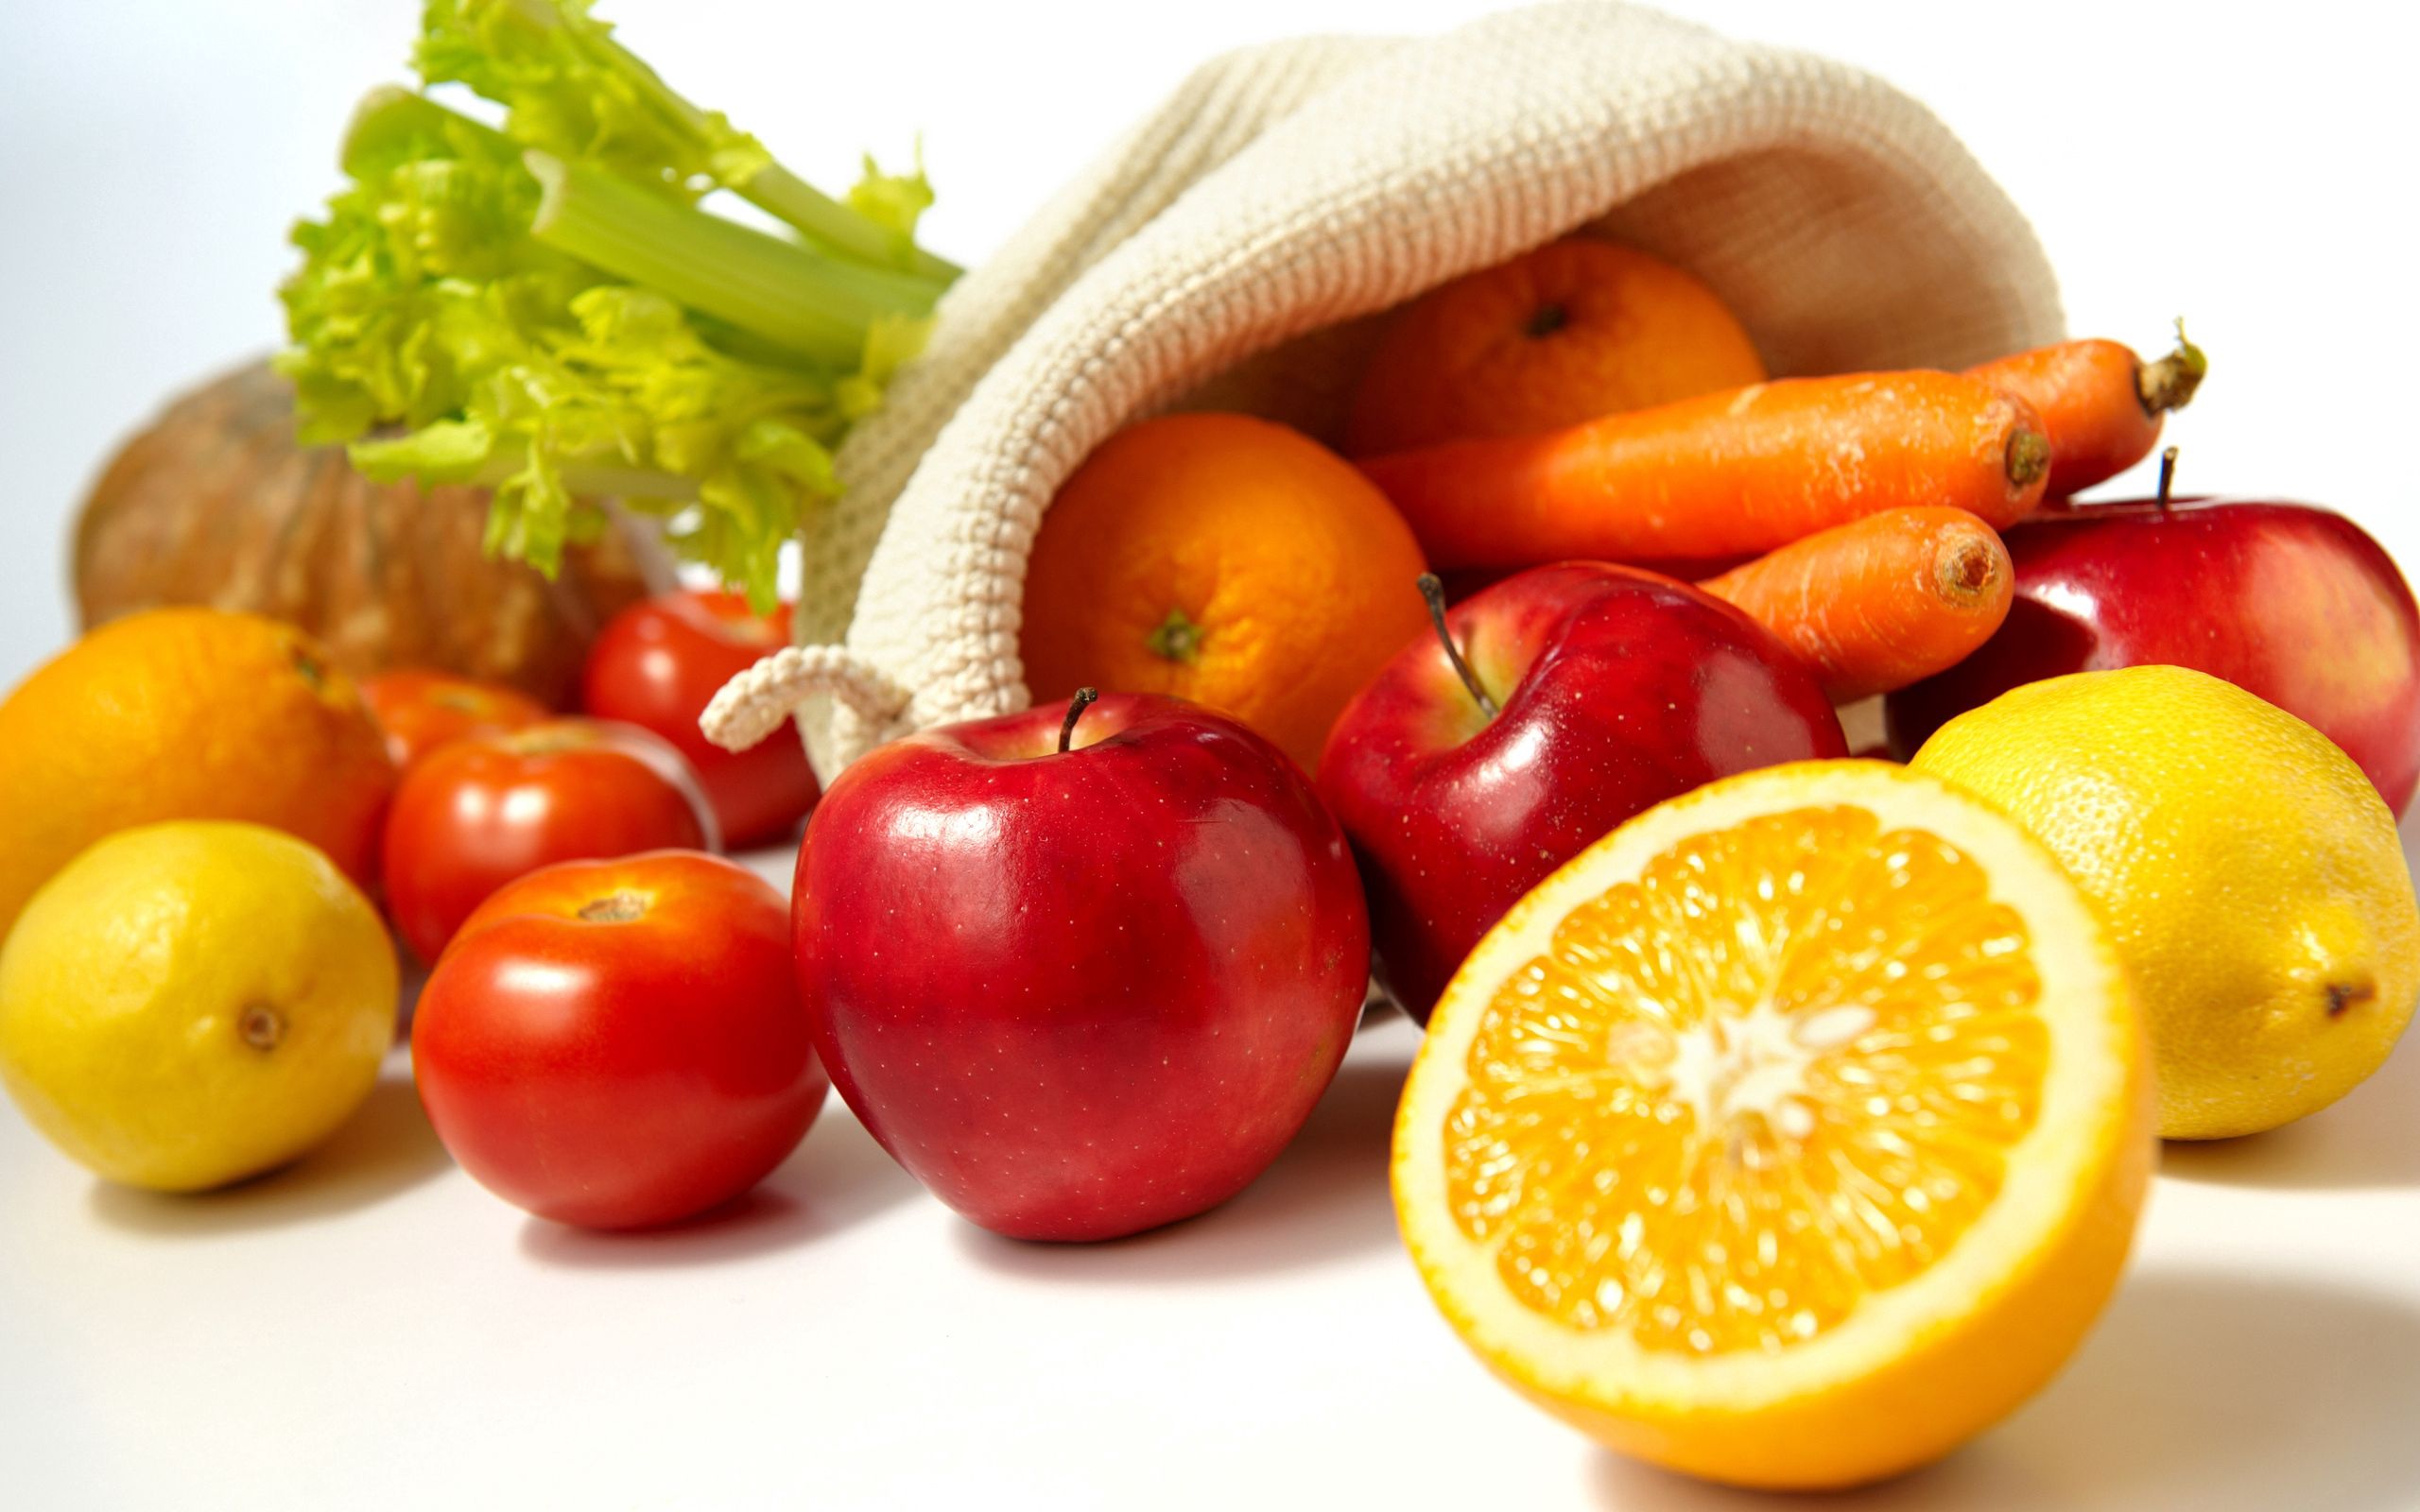 Descarga gratis la imagen Frutas, Comida, Verduras, Limón, Bolso, Saco, Zanahoria, Manzanas en el escritorio de tu PC